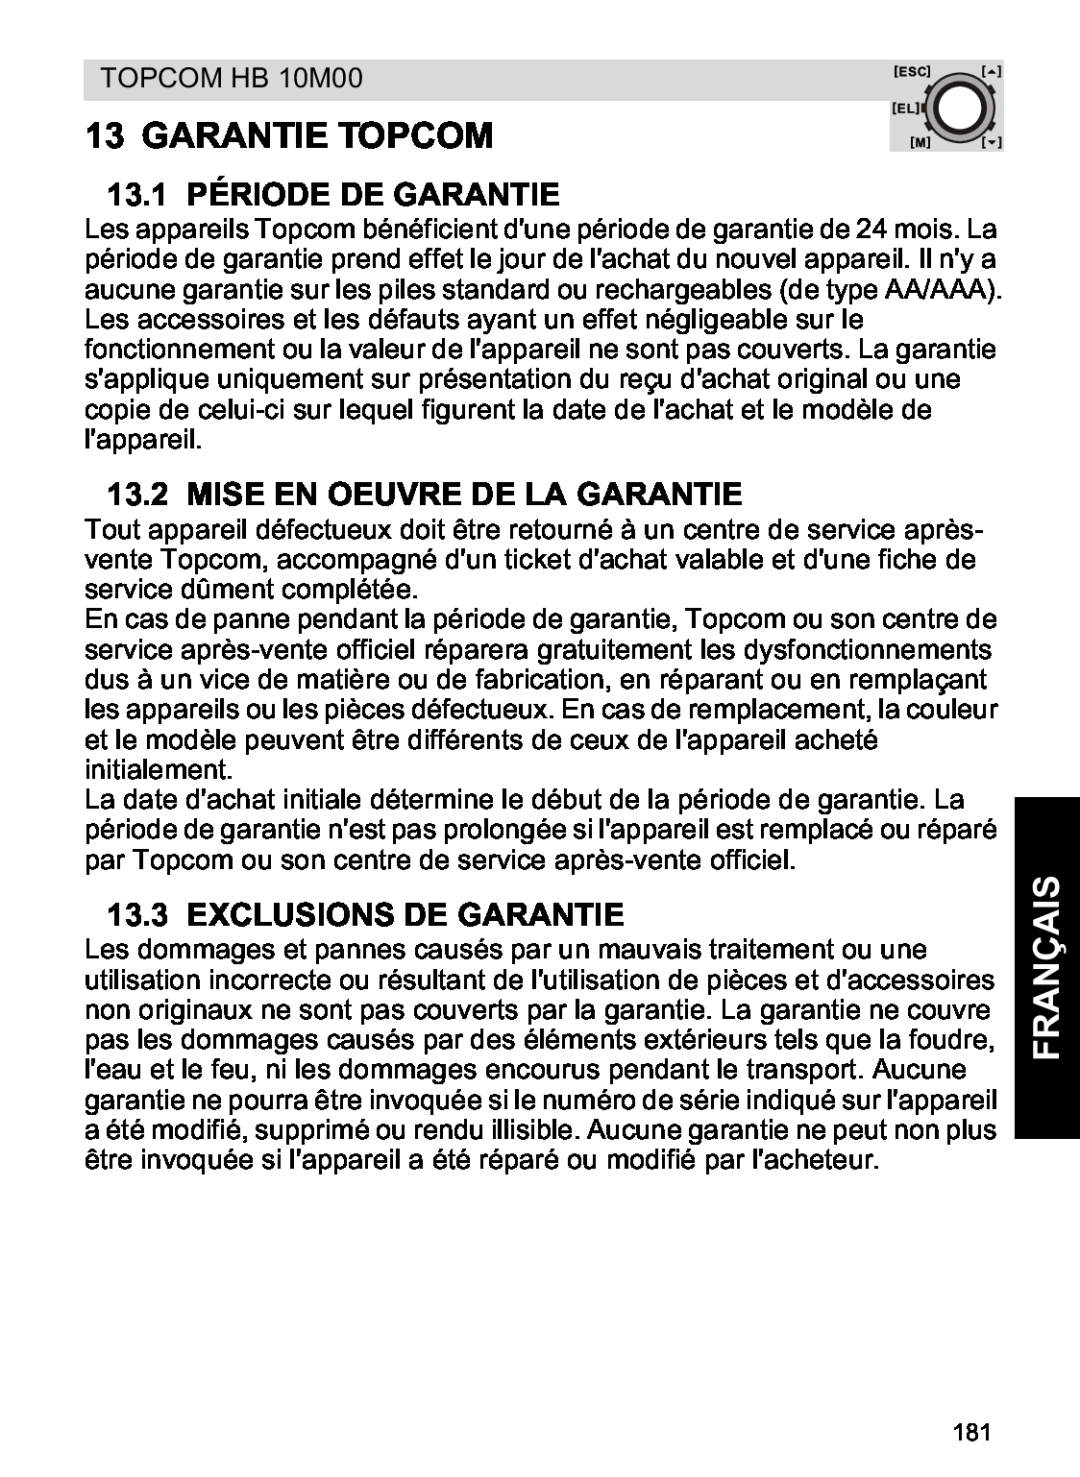 Topcom HB 10M00 Garantie Topcom, 13.1 PÉRIODE DE GARANTIE, Mise En Oeuvre De La Garantie, Exclusions De Garantie, Français 